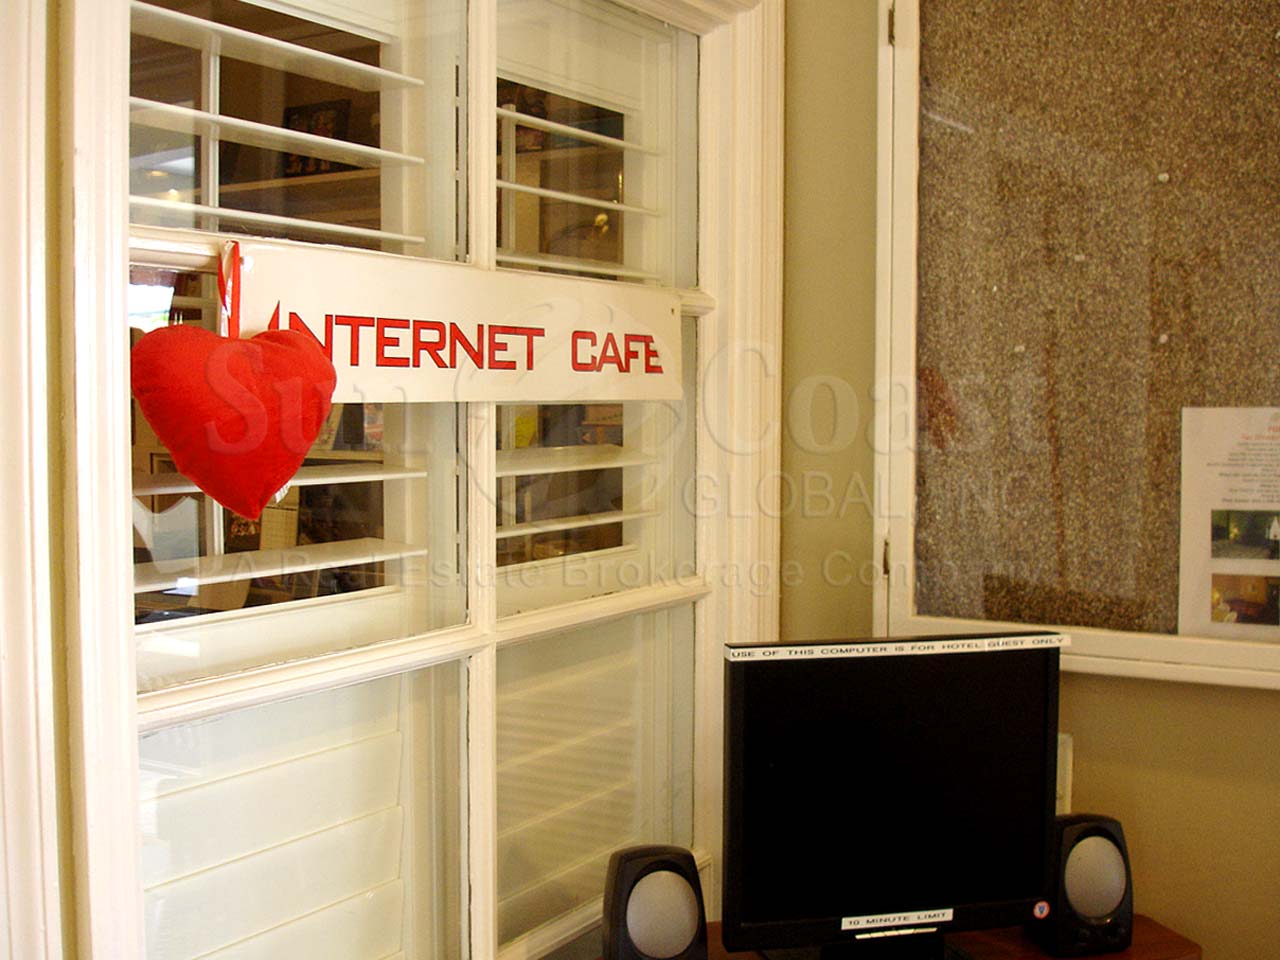 Gulfcoast Inn Of Naples Internet Cafe